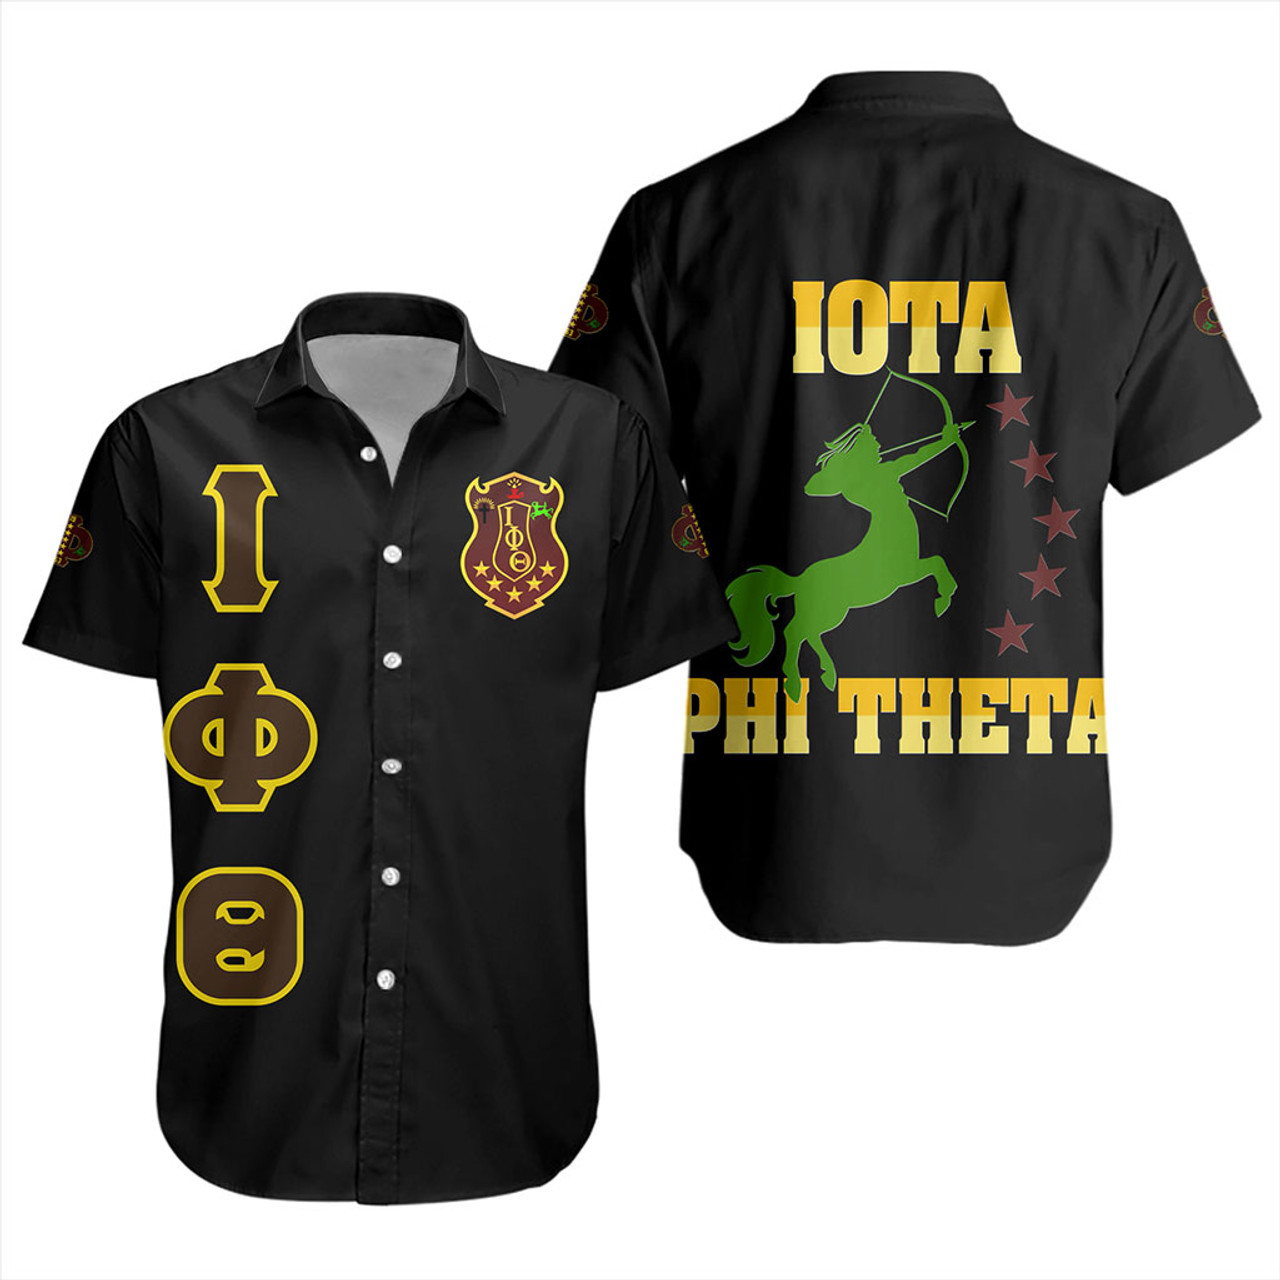 Iota Phi Theta Short Sleeve Shirt Letter